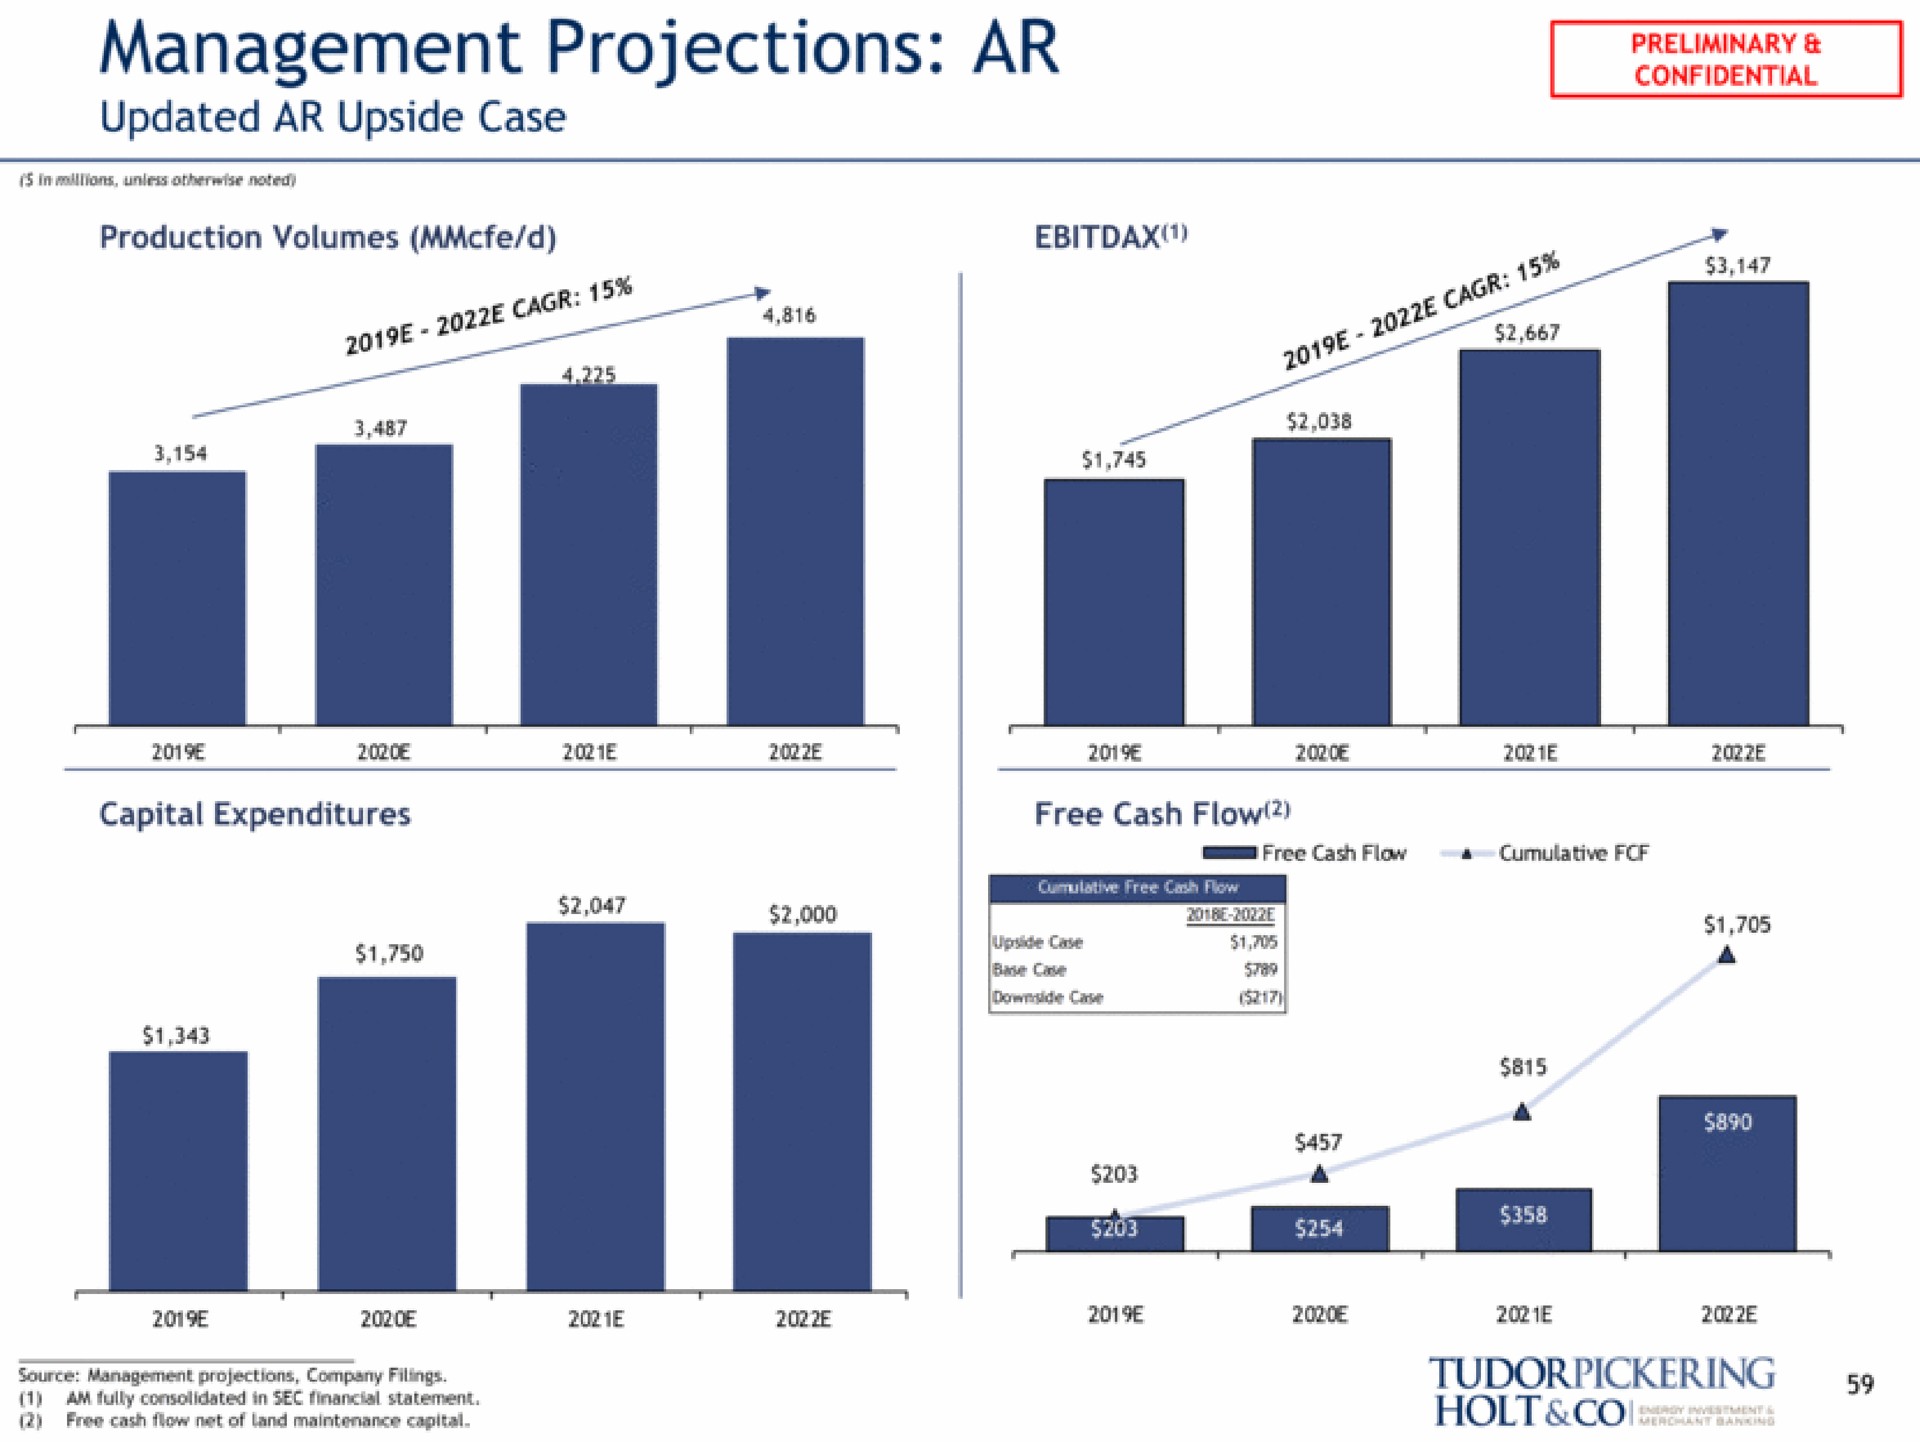 management projections updated upside case | Tudor, Pickering, Holt & Co